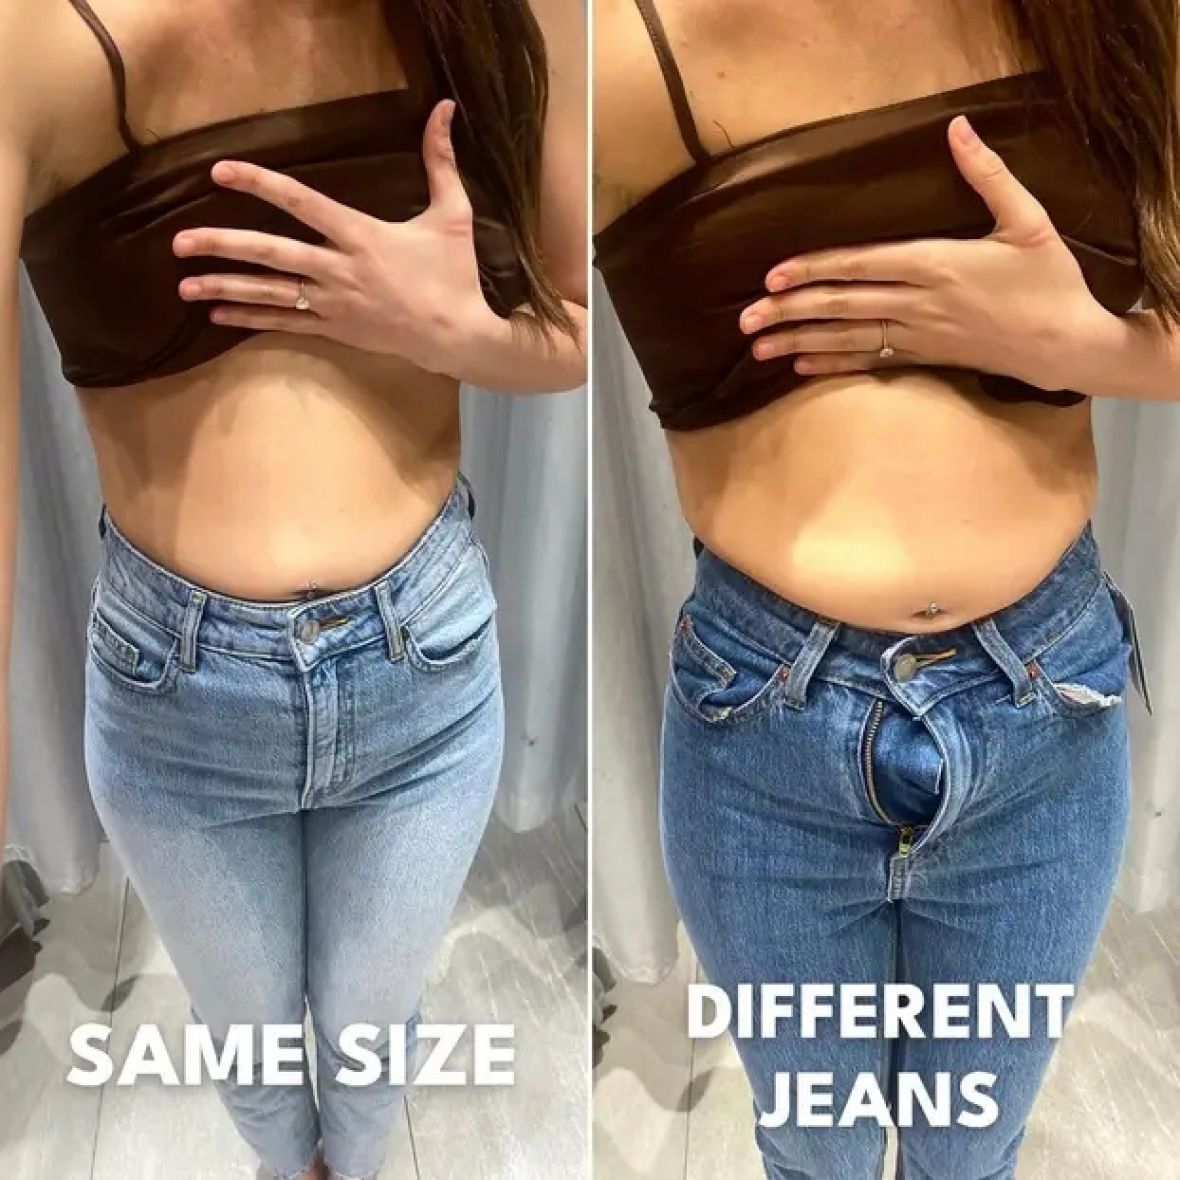 Ista veličina, različite pantalone - undefined